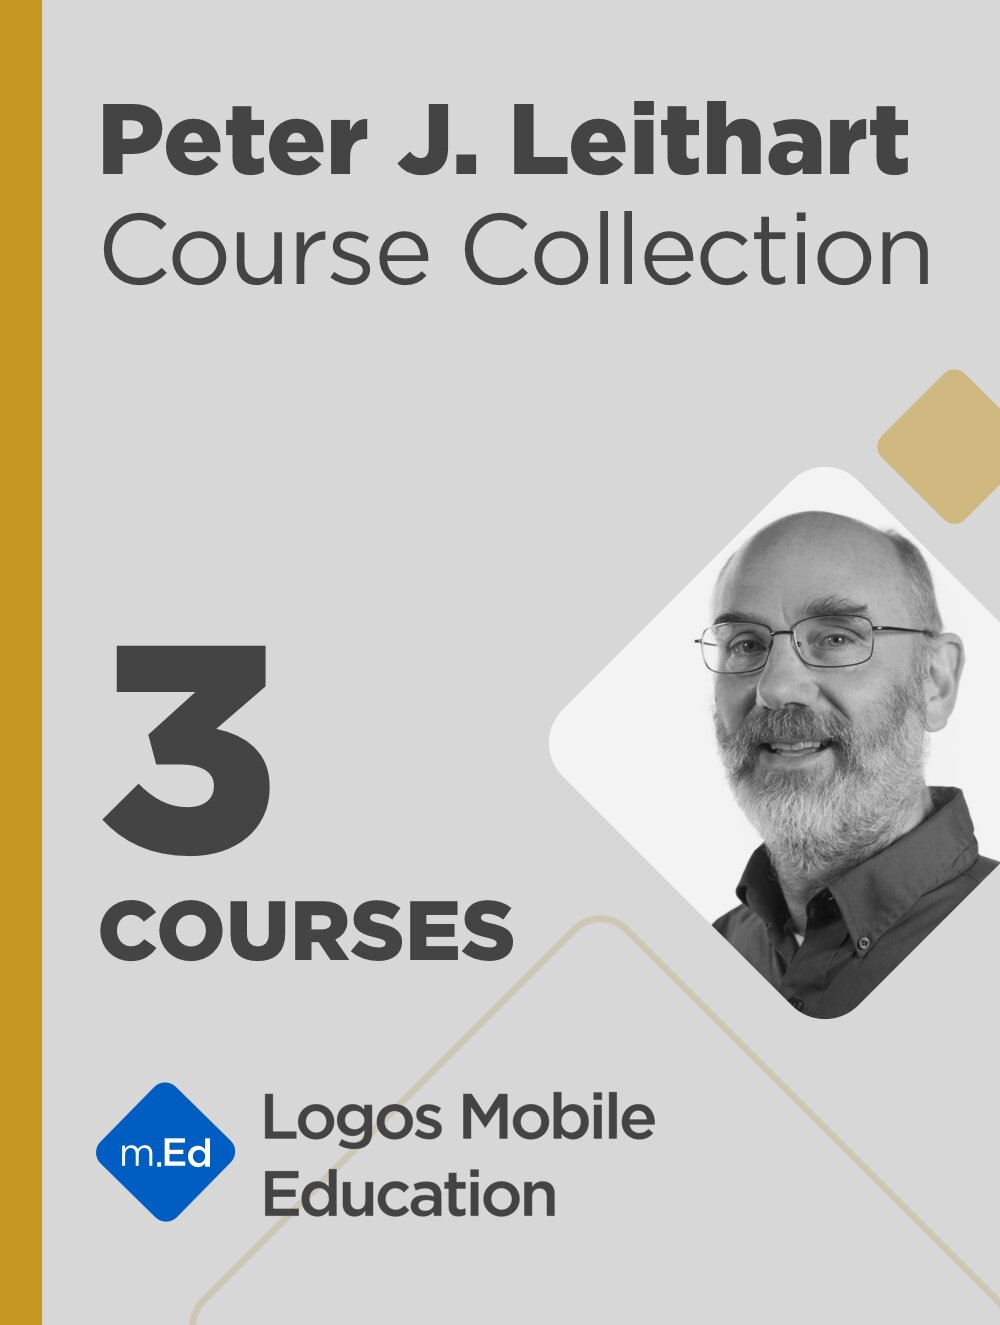 Peter J. Leithart Course Collection (3 courses)